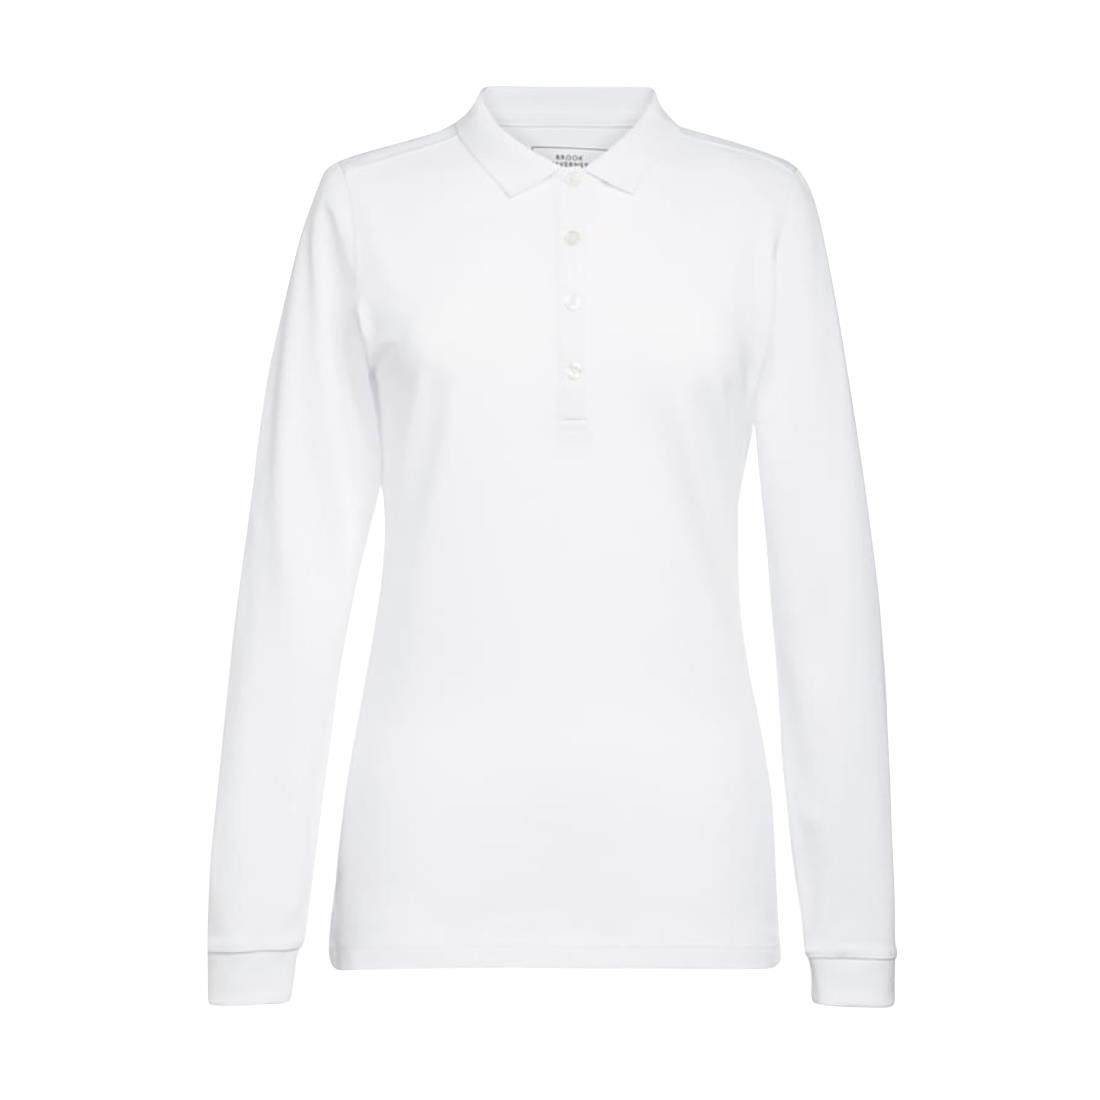 BA141-XL Brook Taverner Anna Womens Long Sleeve Polo Shirt White Size XL